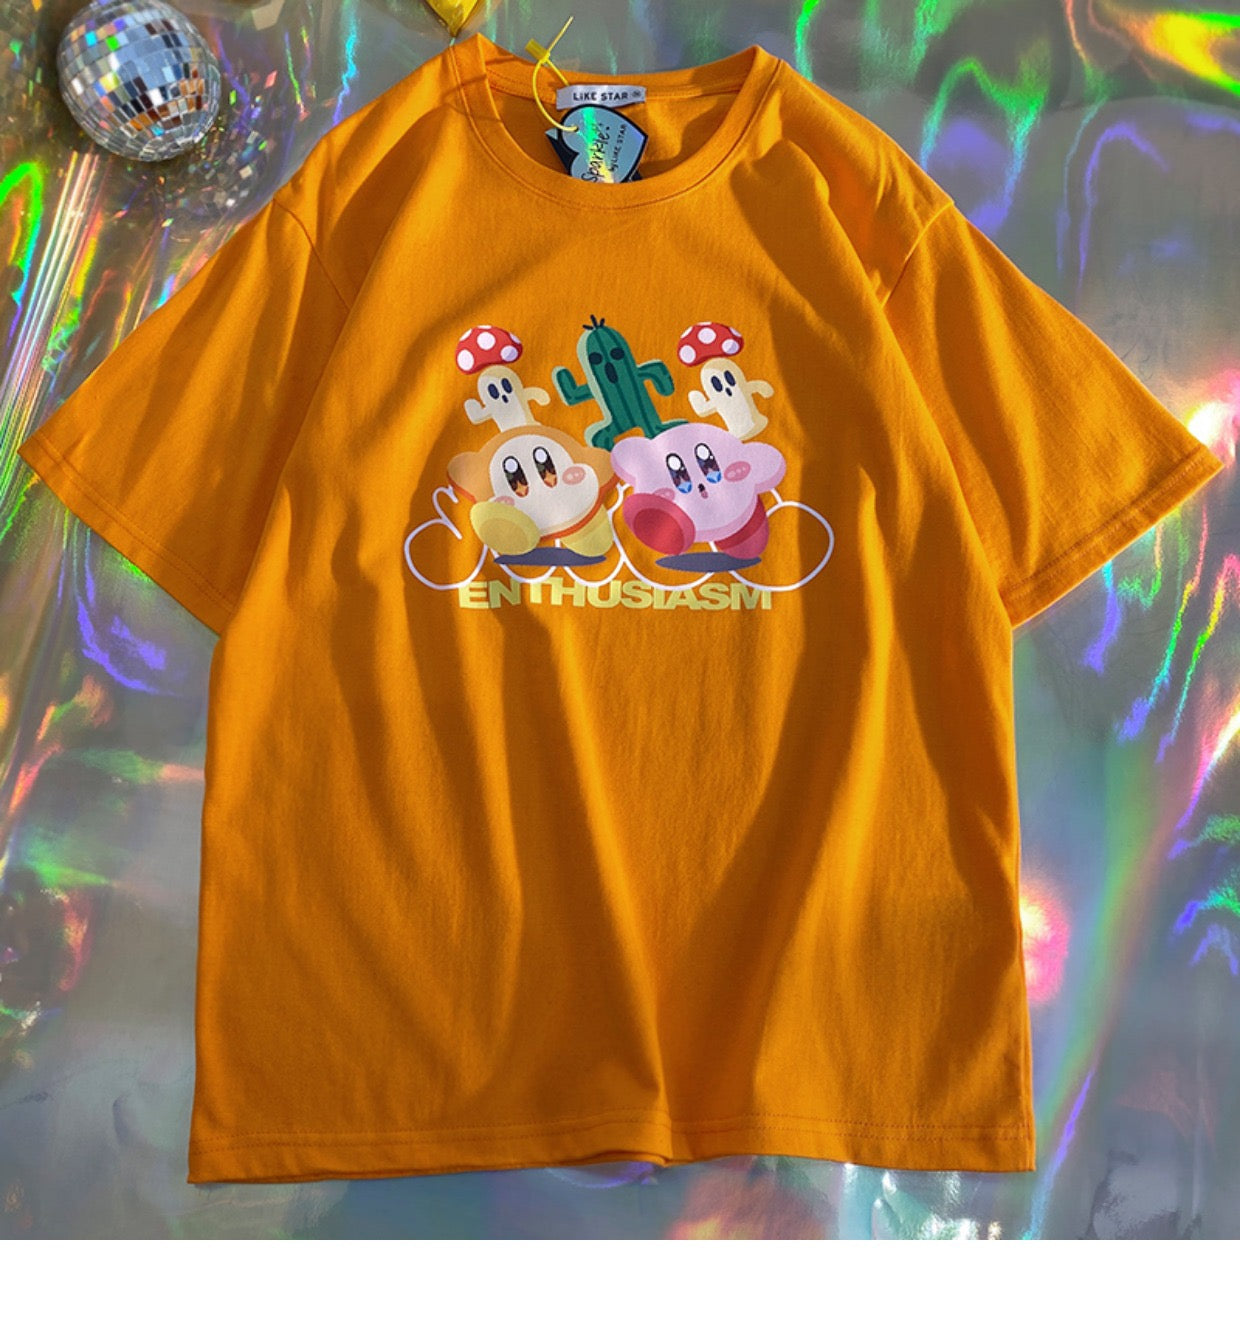 Enthusiasm Kirby Oversized T-shirt